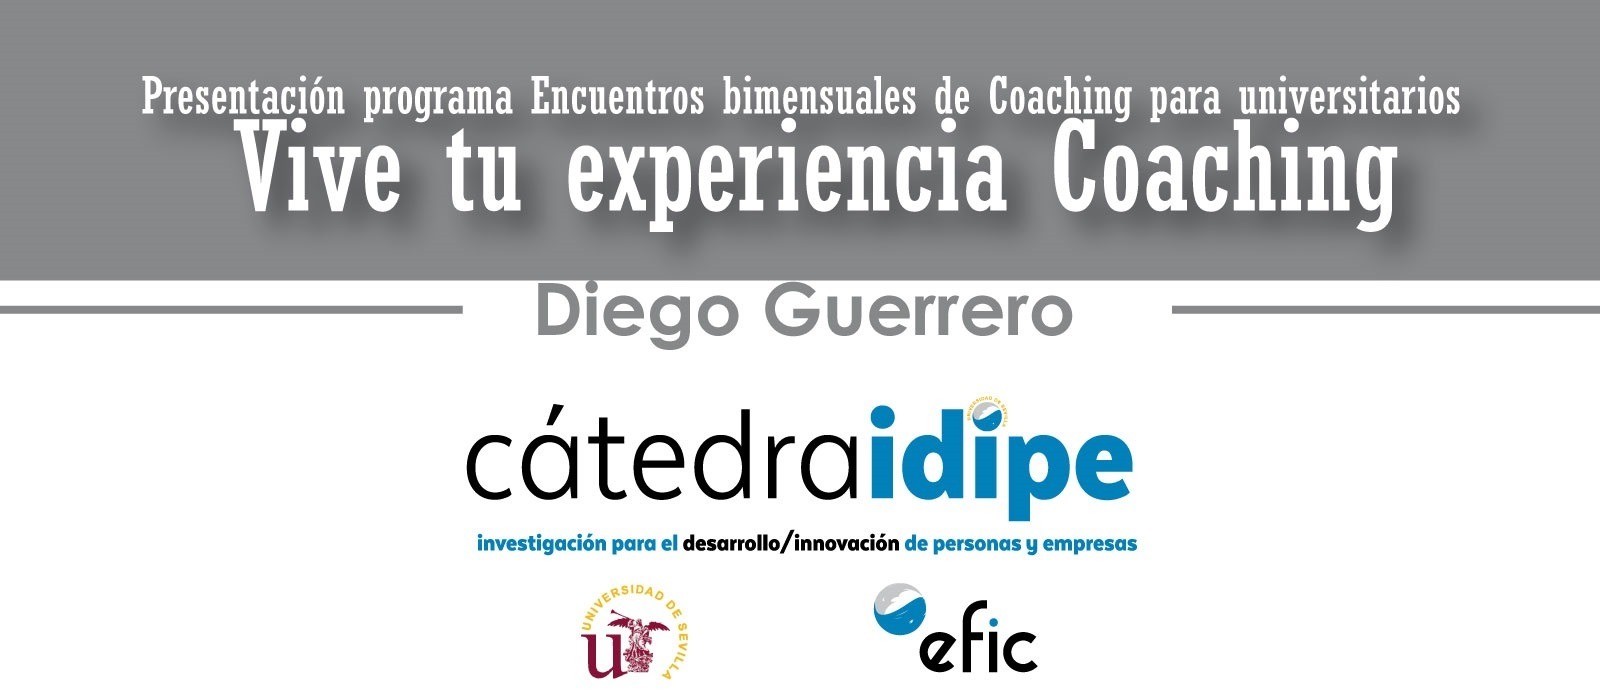 CATEDRA-IDIPE-vive-tu-experiencia-coaching-2